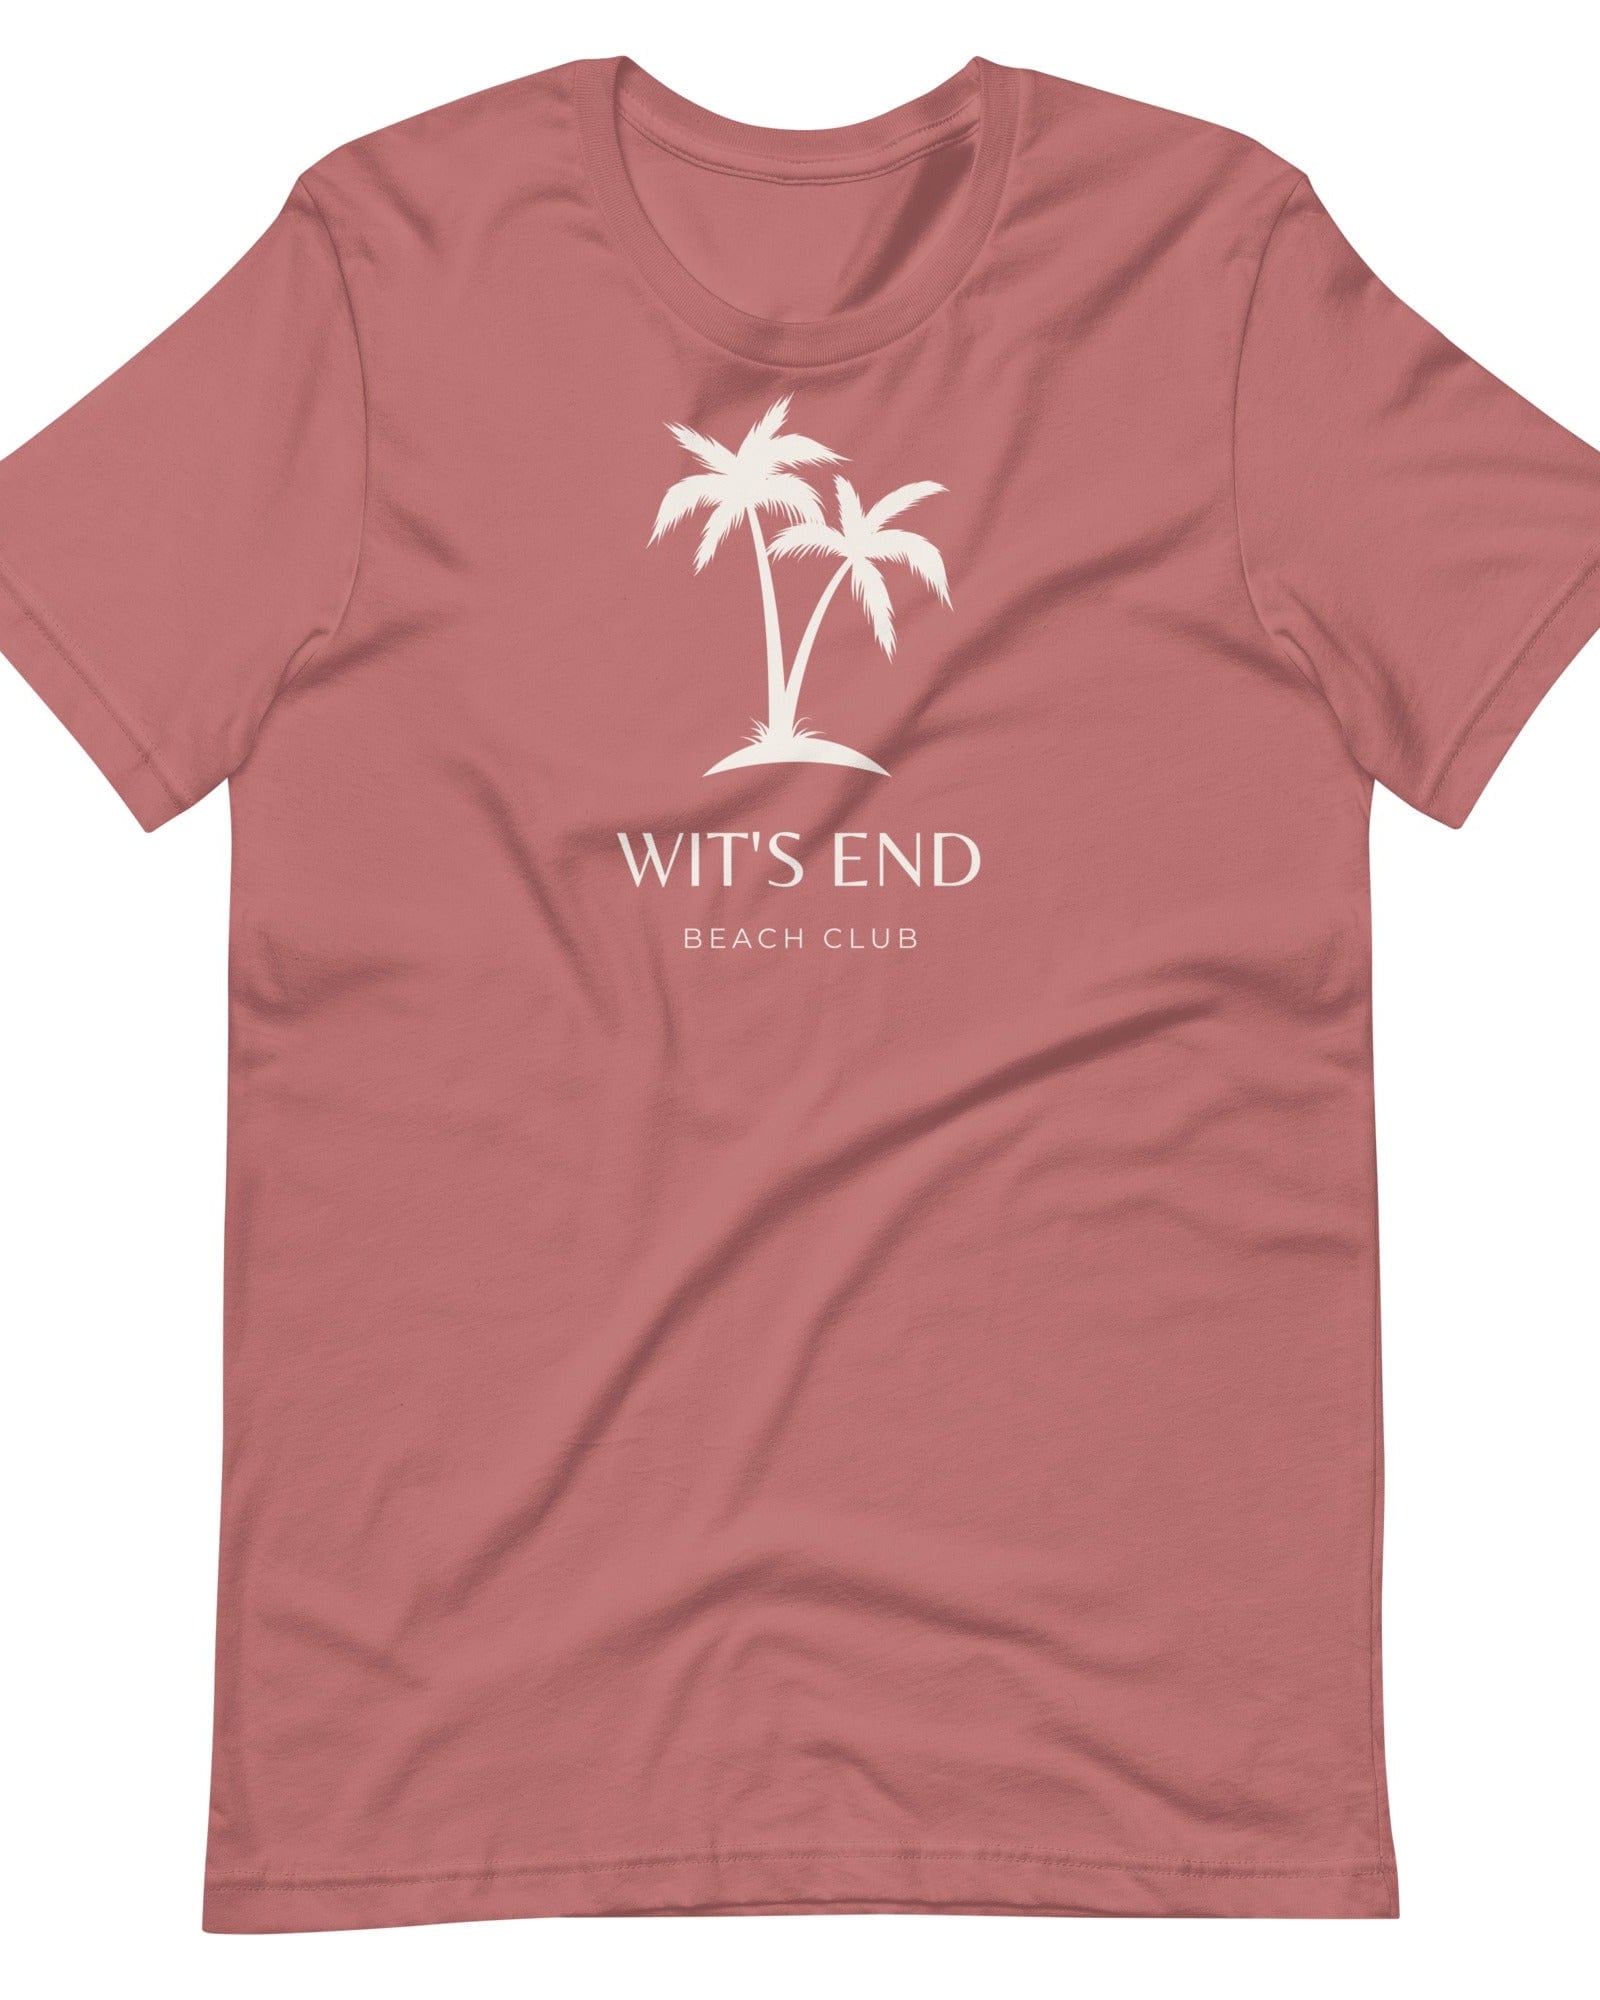 Wit's End Beach Club T-shirt Mauve / S Shirts & Tops Jolly & Goode